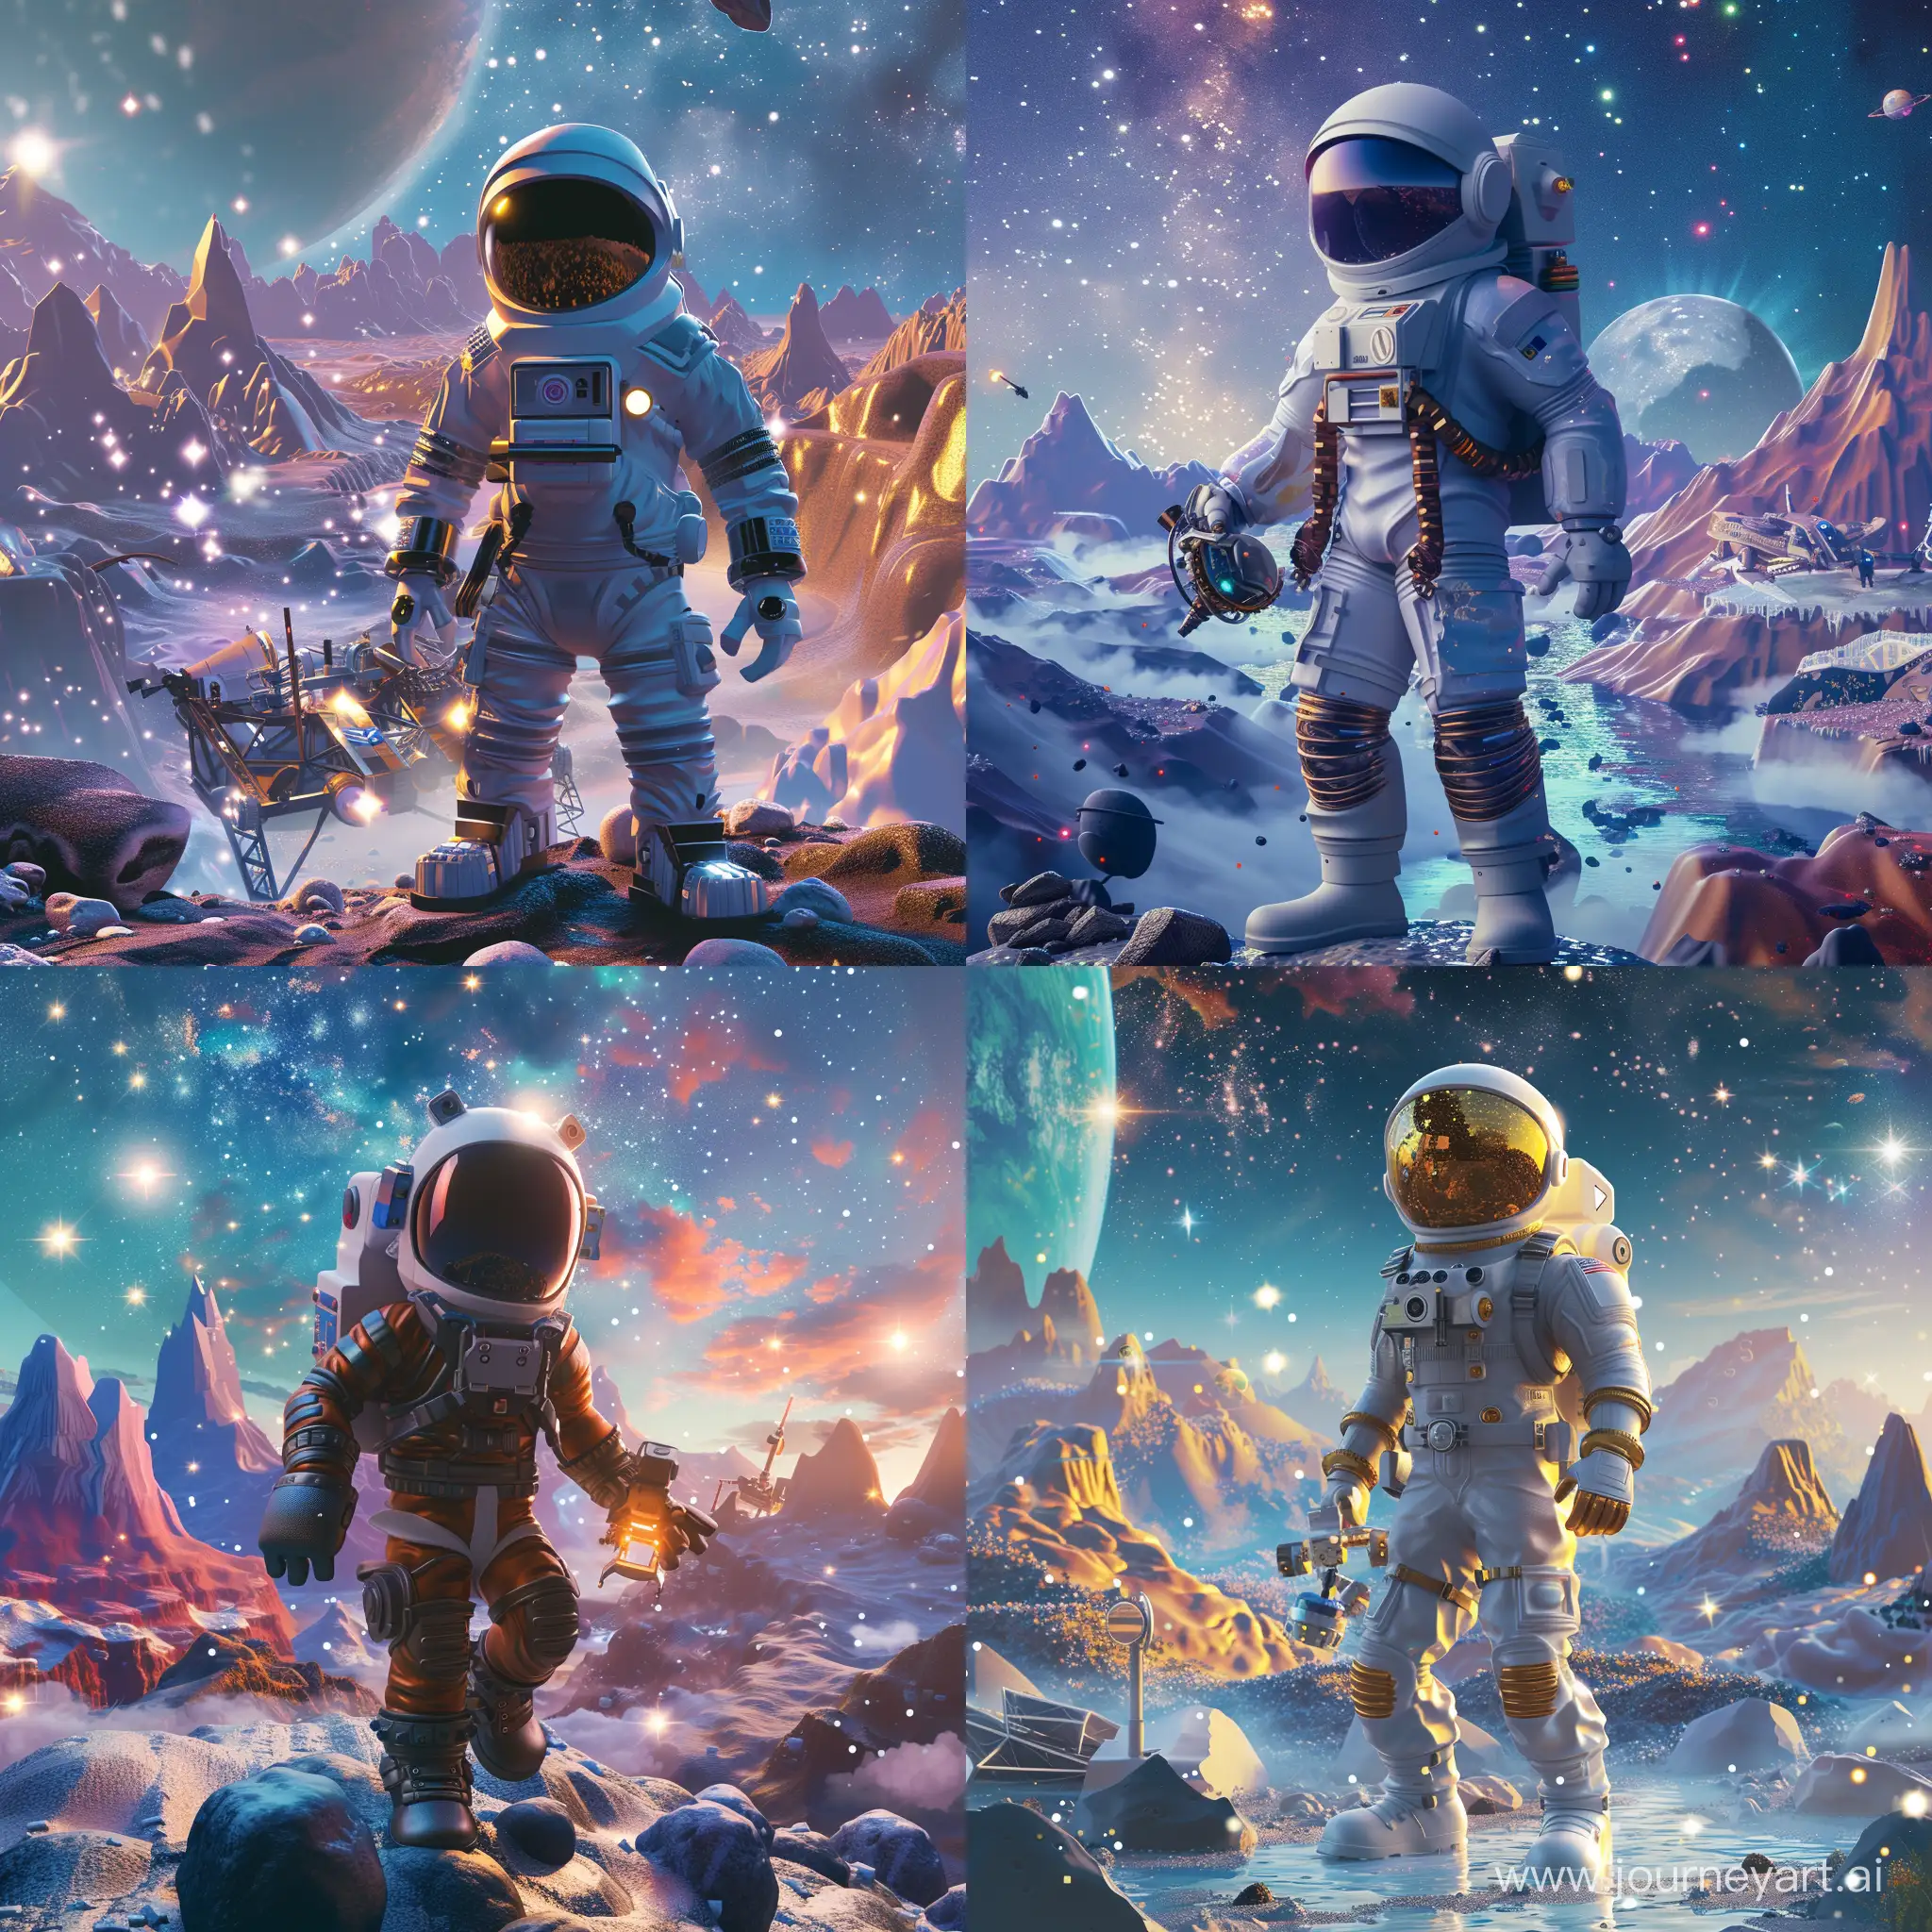 Roblox-Astronaut-Explores-Futuristic-Planet-with-Spaceship